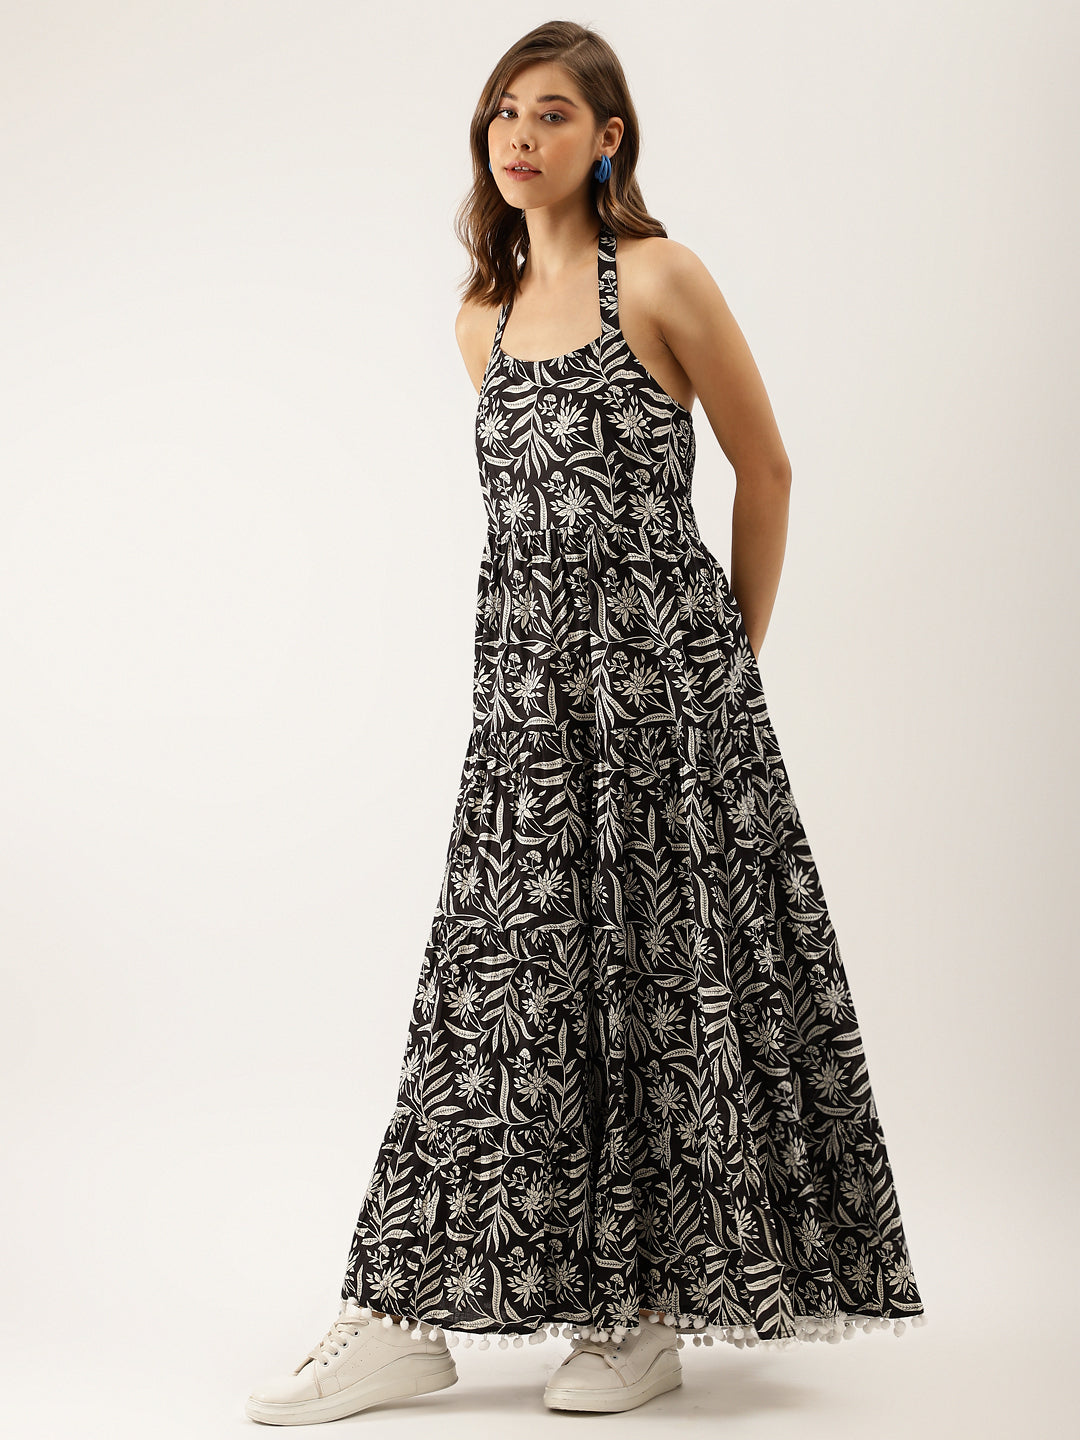 Divena Black Floral Printed Cotton Ethnic Dress for Women